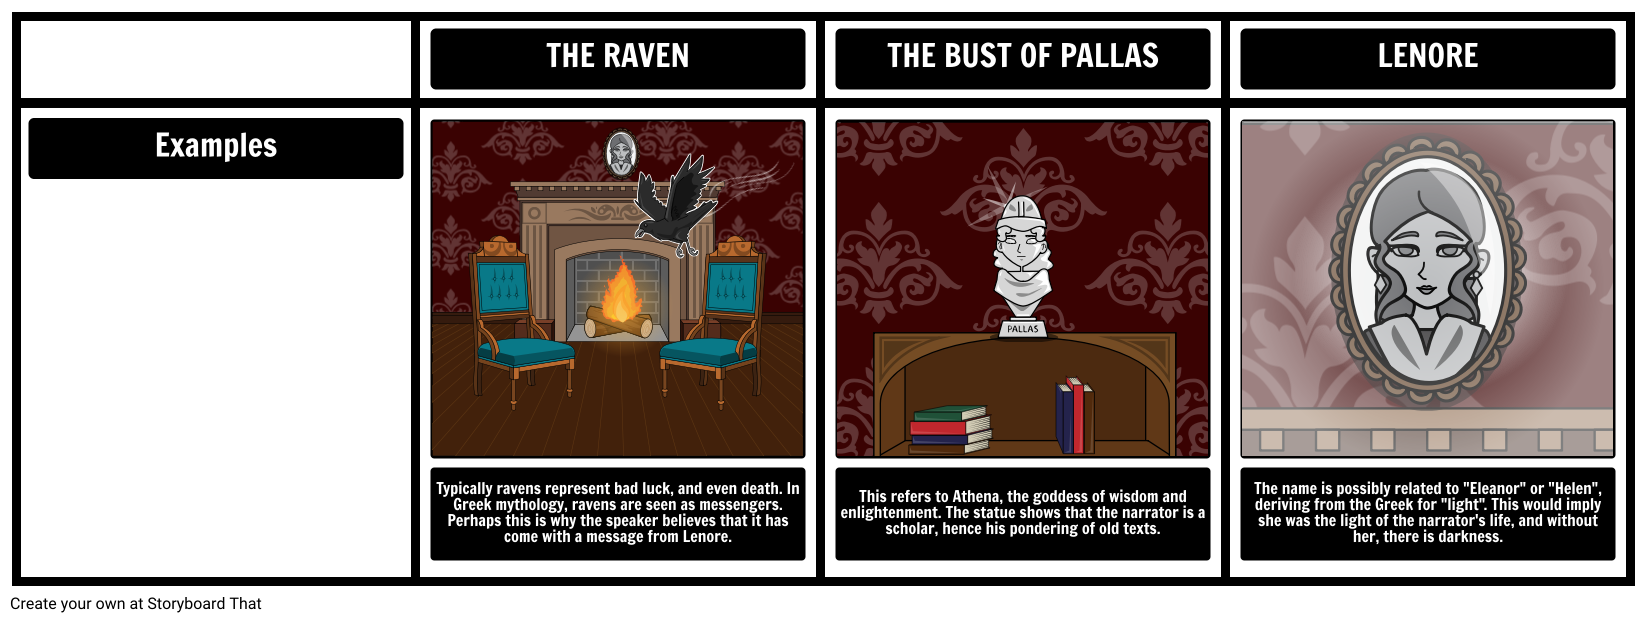 The Raven Symbolism